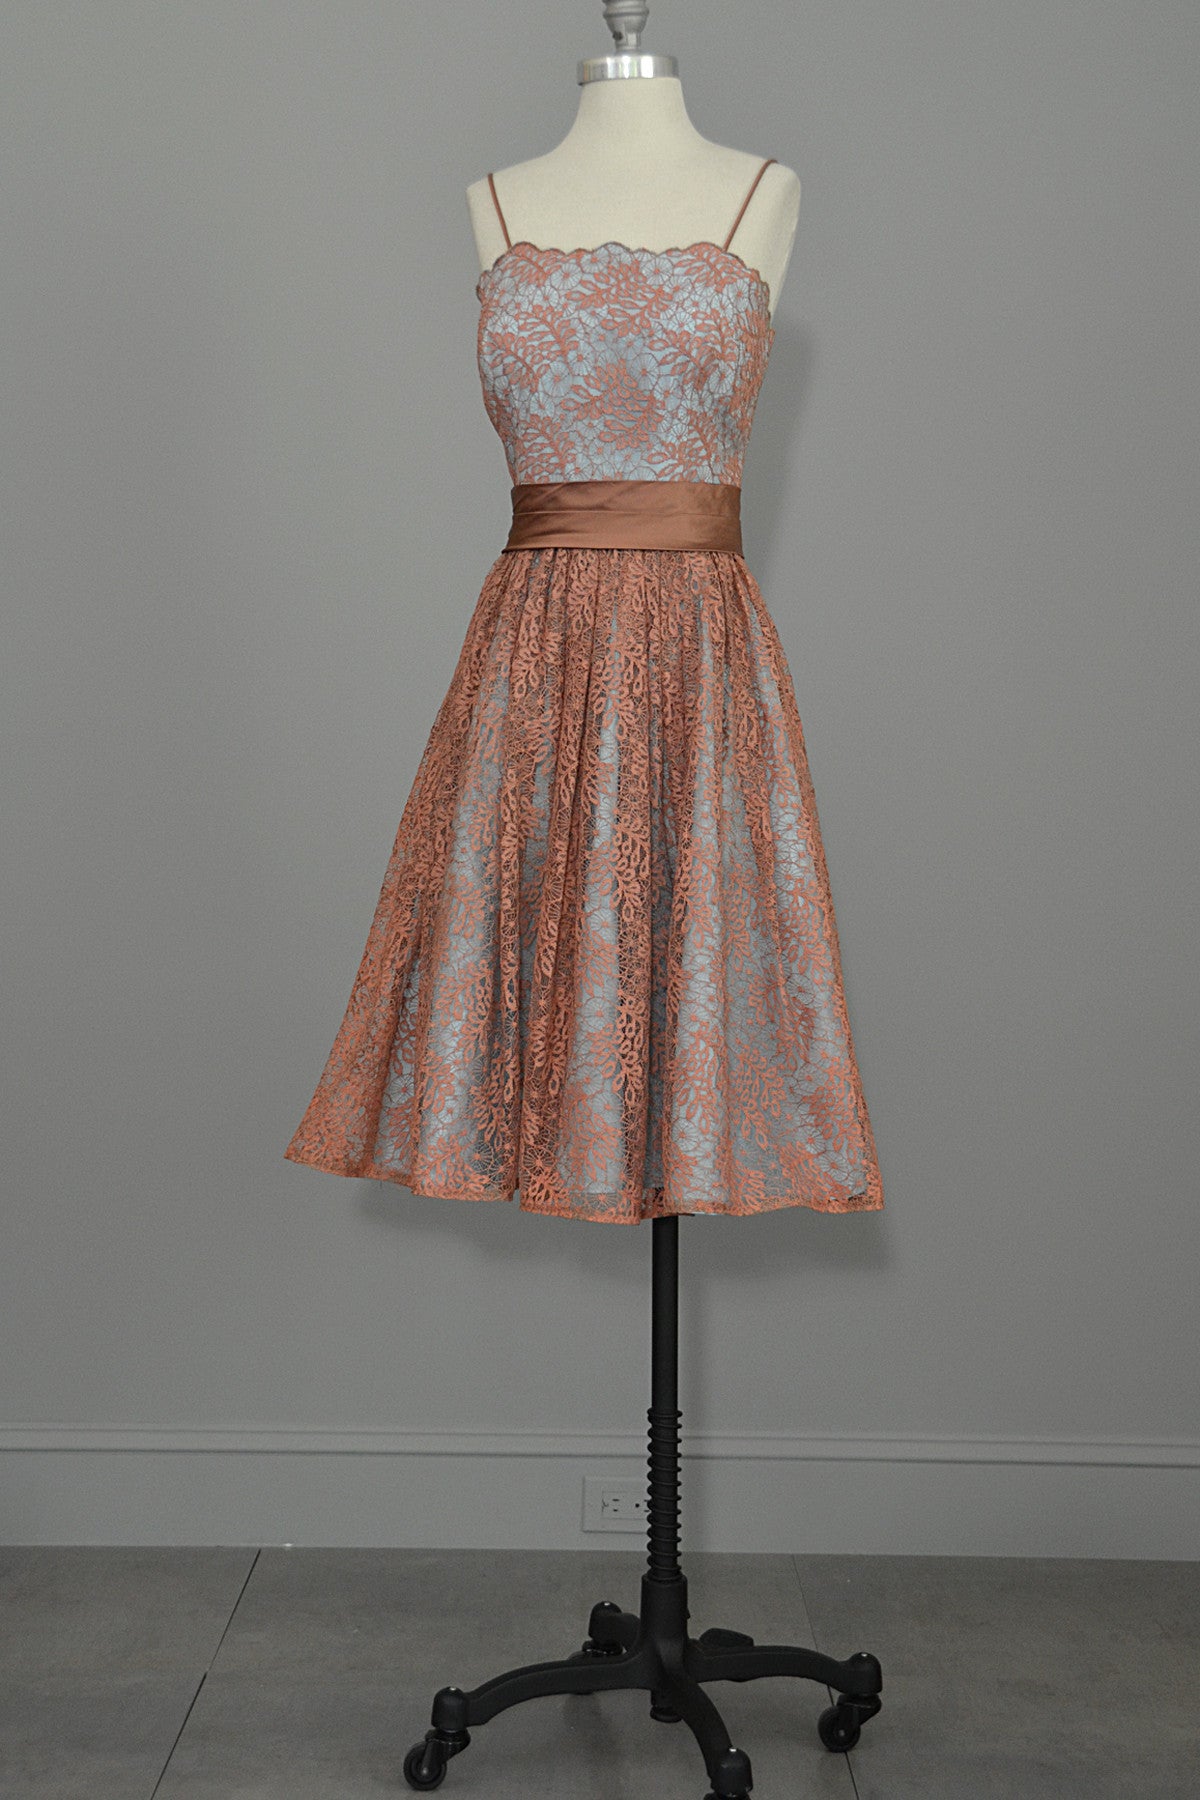 1950's 60's Vintage Lace Prom Party Dress Terra Cotta Lace over Aqua Taffeta